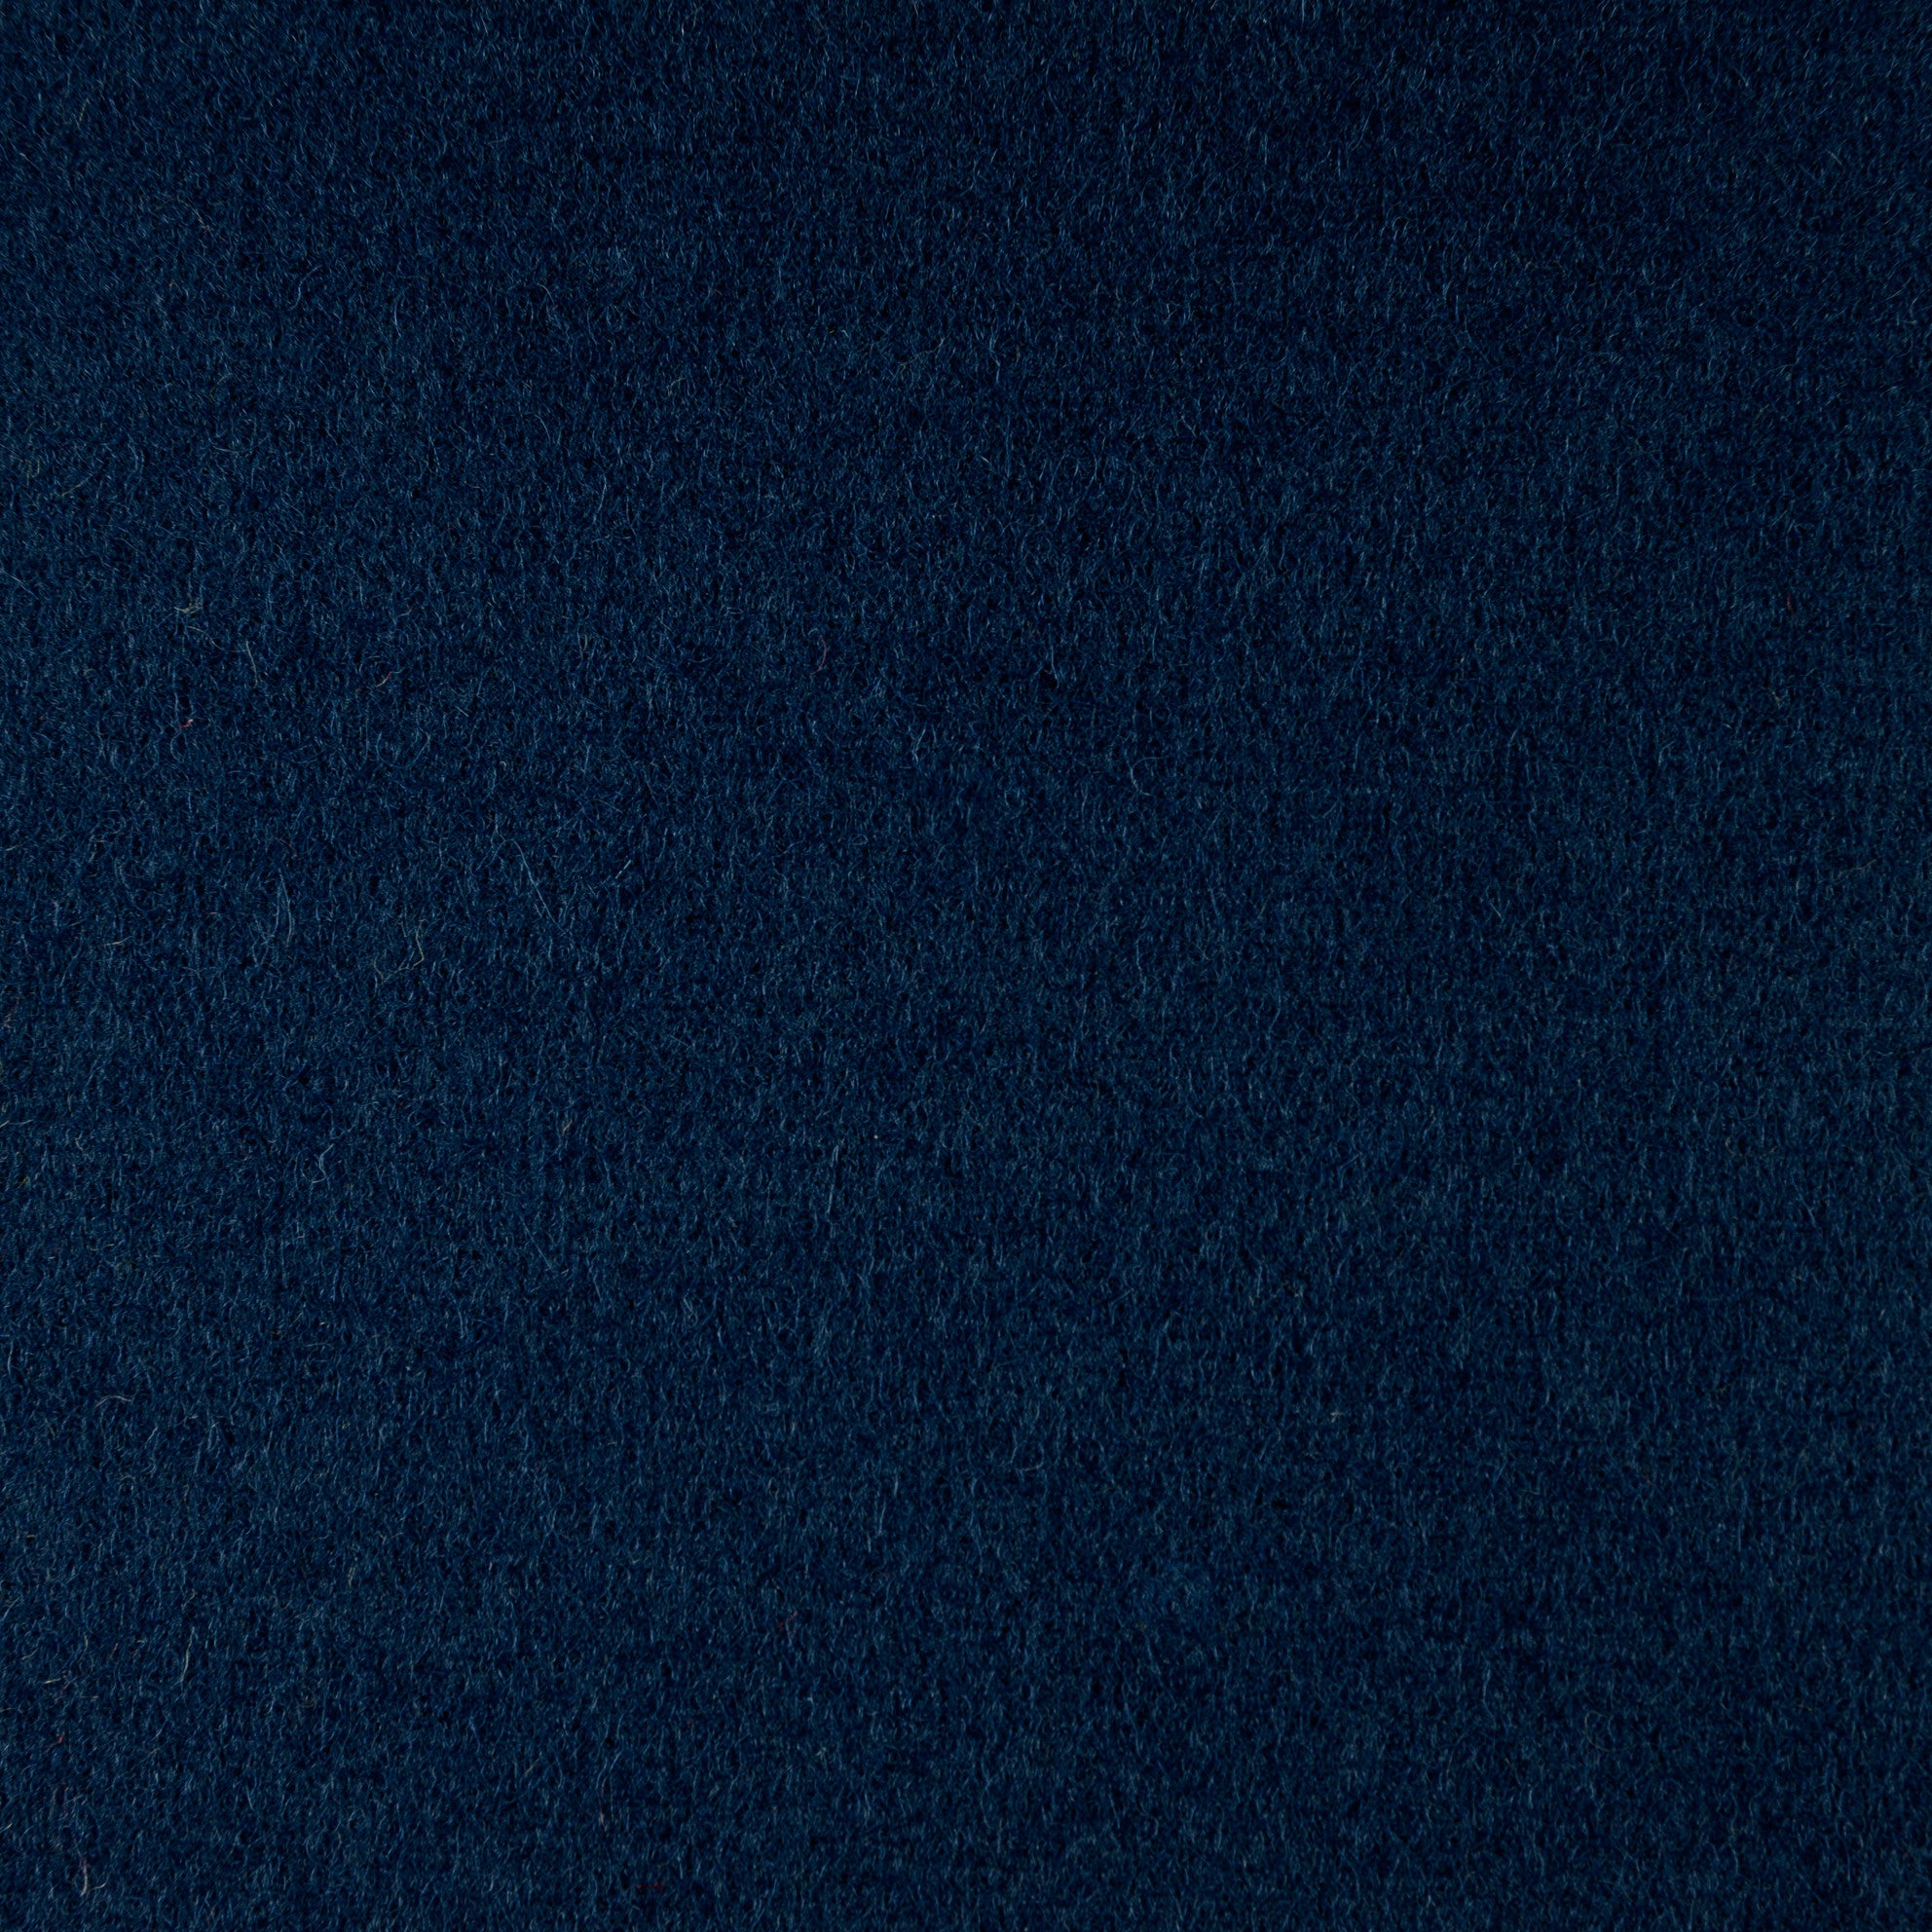 Woven Plain Fabric - Dawlish 19/060 Plimsoll Blue | Nicholas Engert Interiors